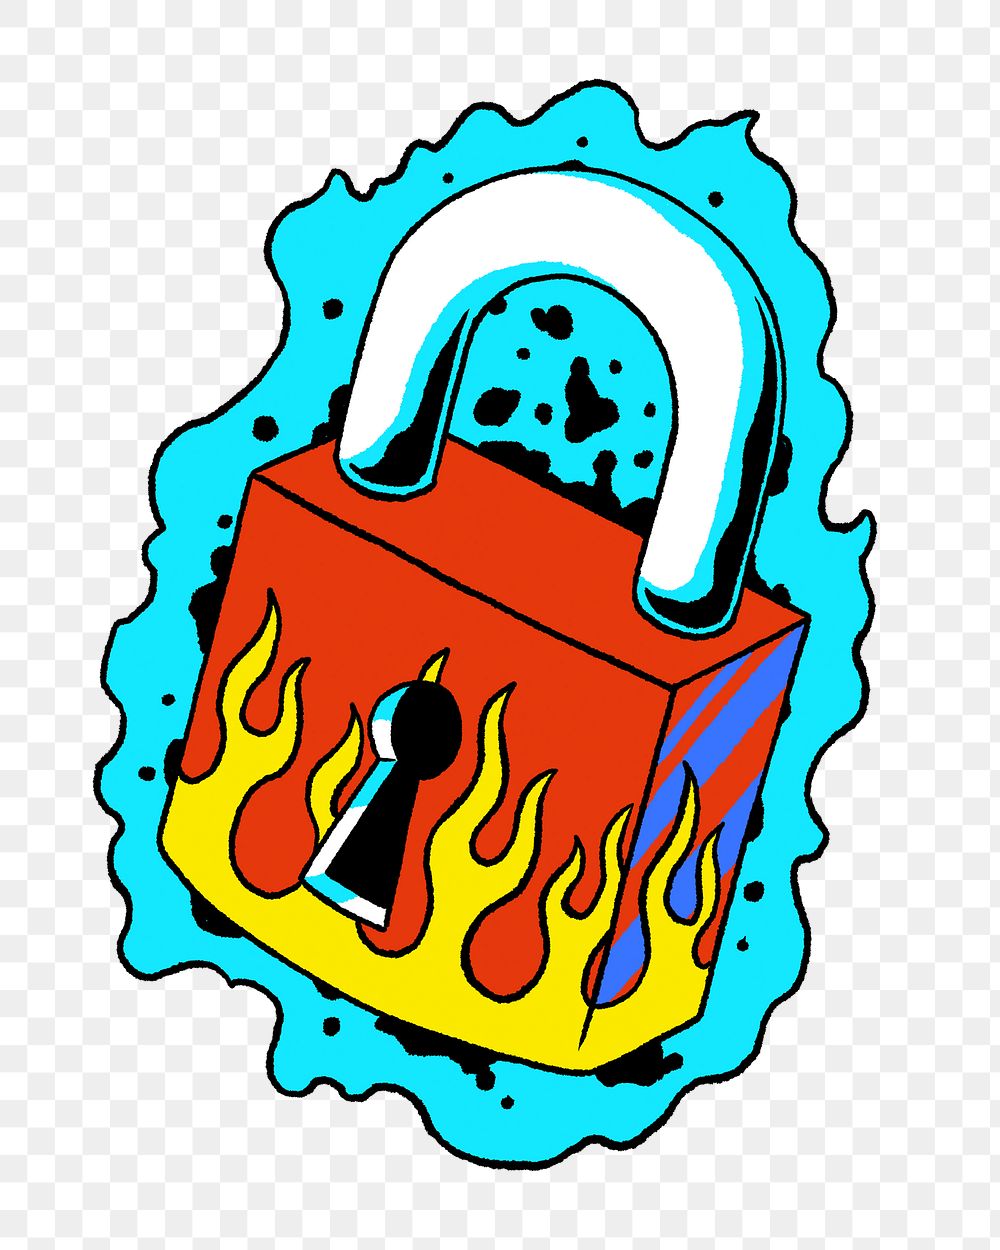 Png fire neon padlock illustration, transparent background